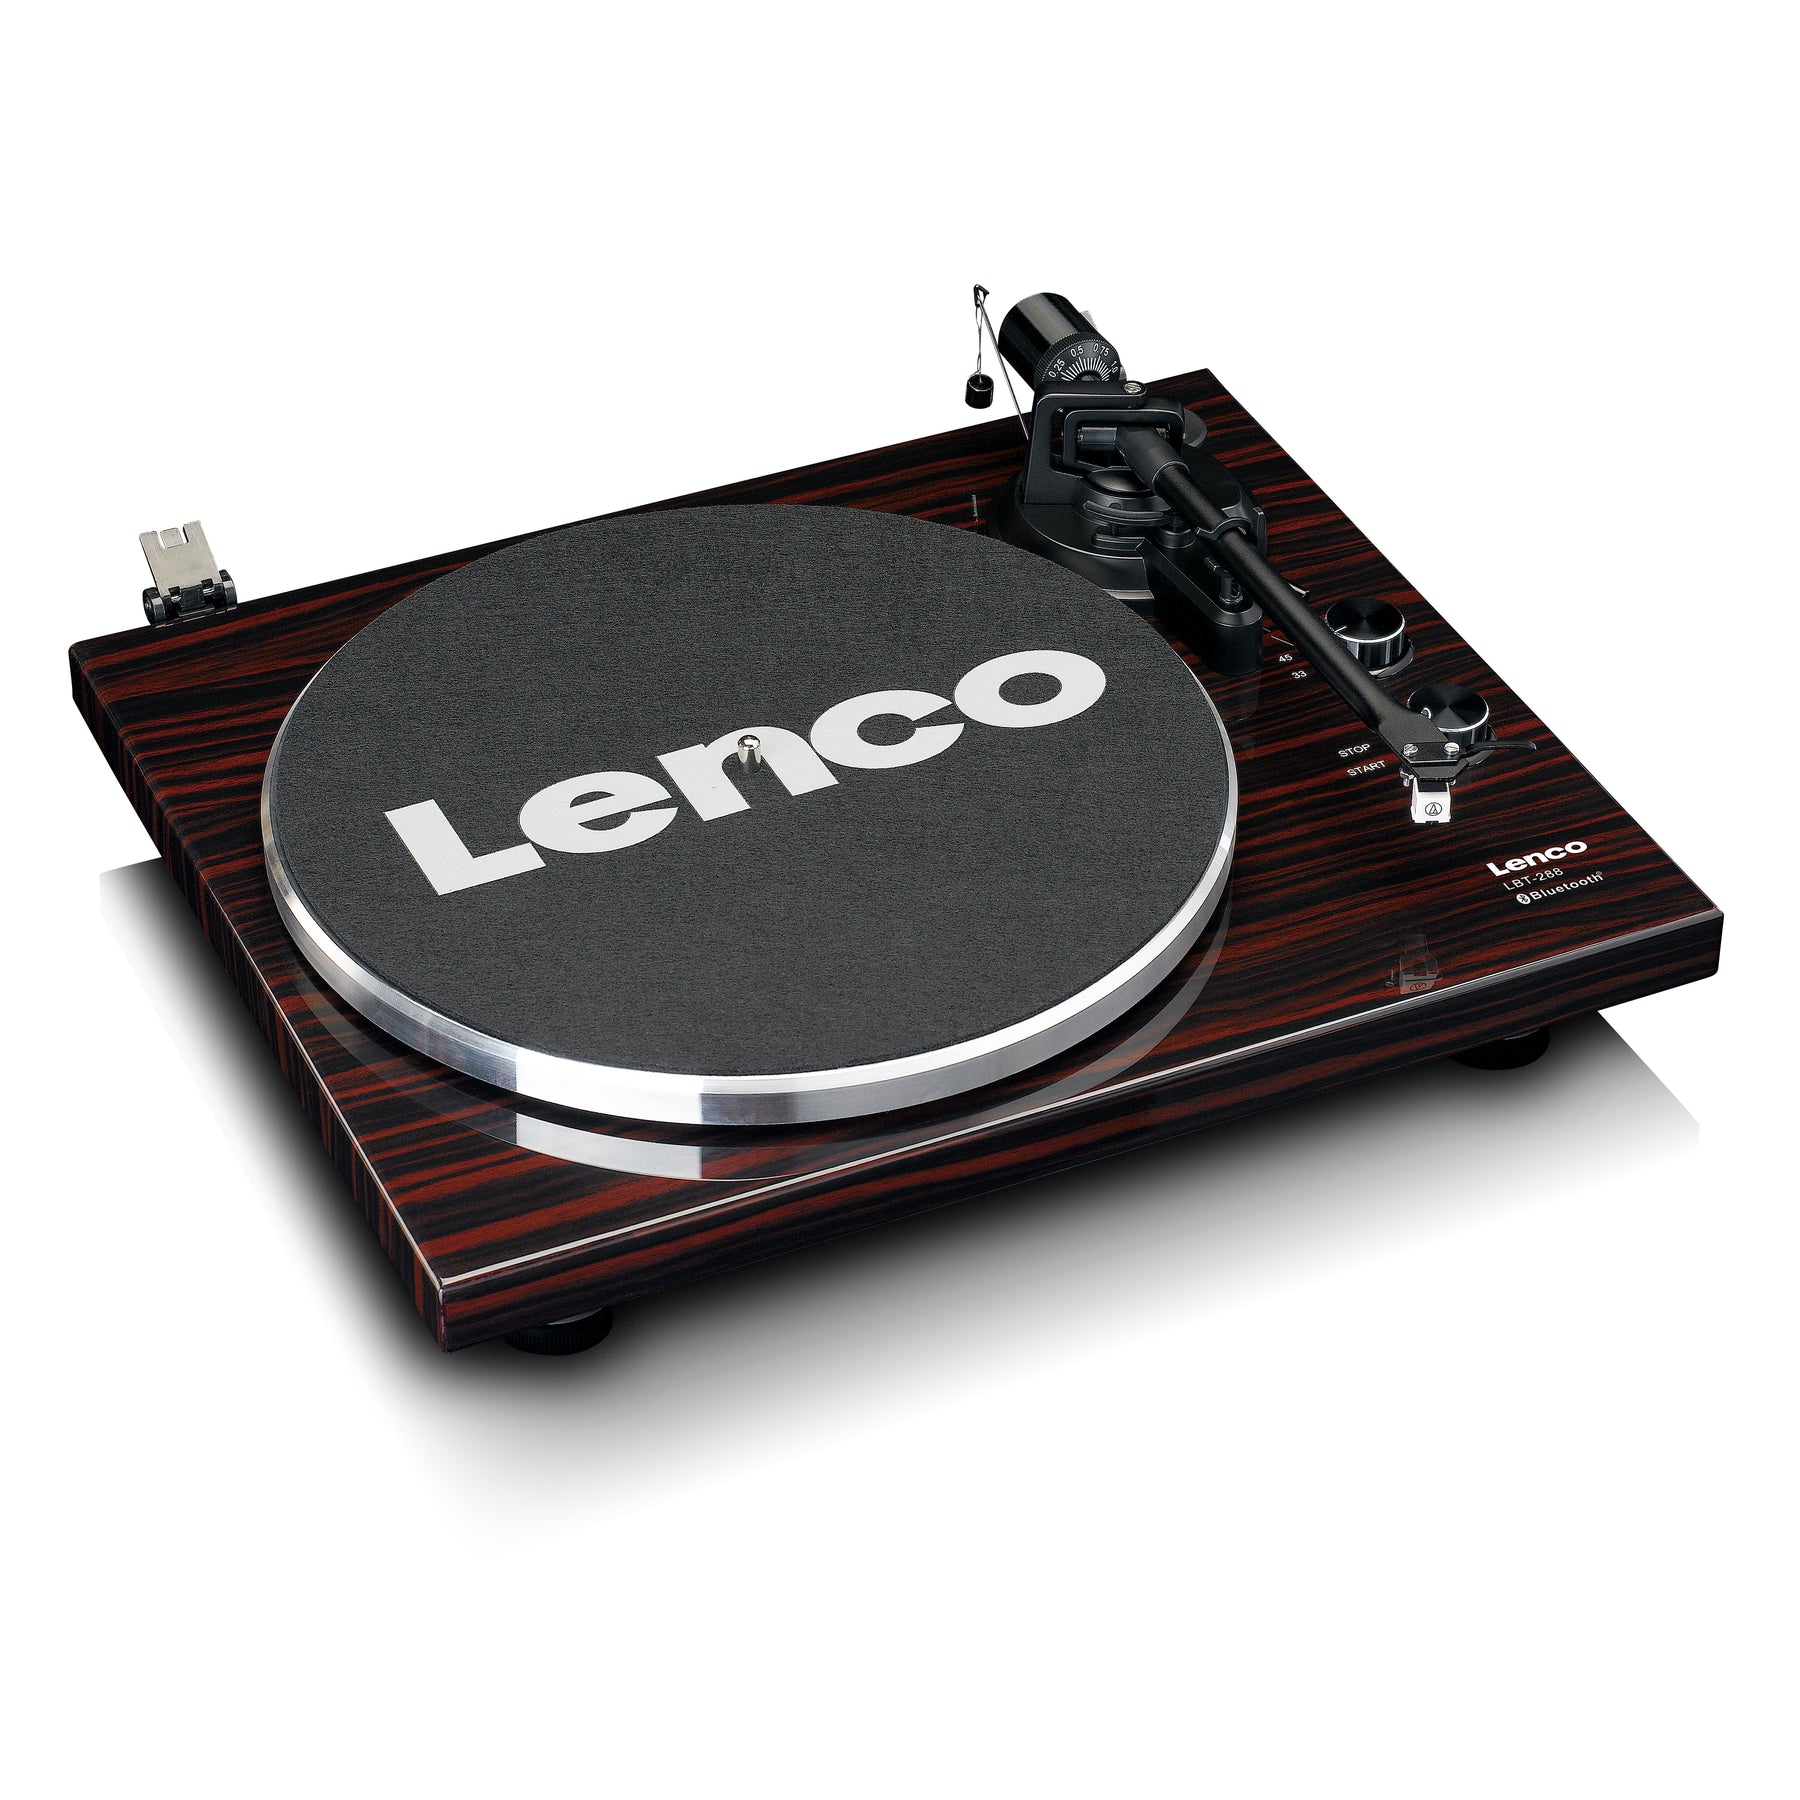 Lenco.de Lenco Webshop Lenco - Webshop Offizieller Jetzt | – im LBT-288WA kaufen? offiziellen